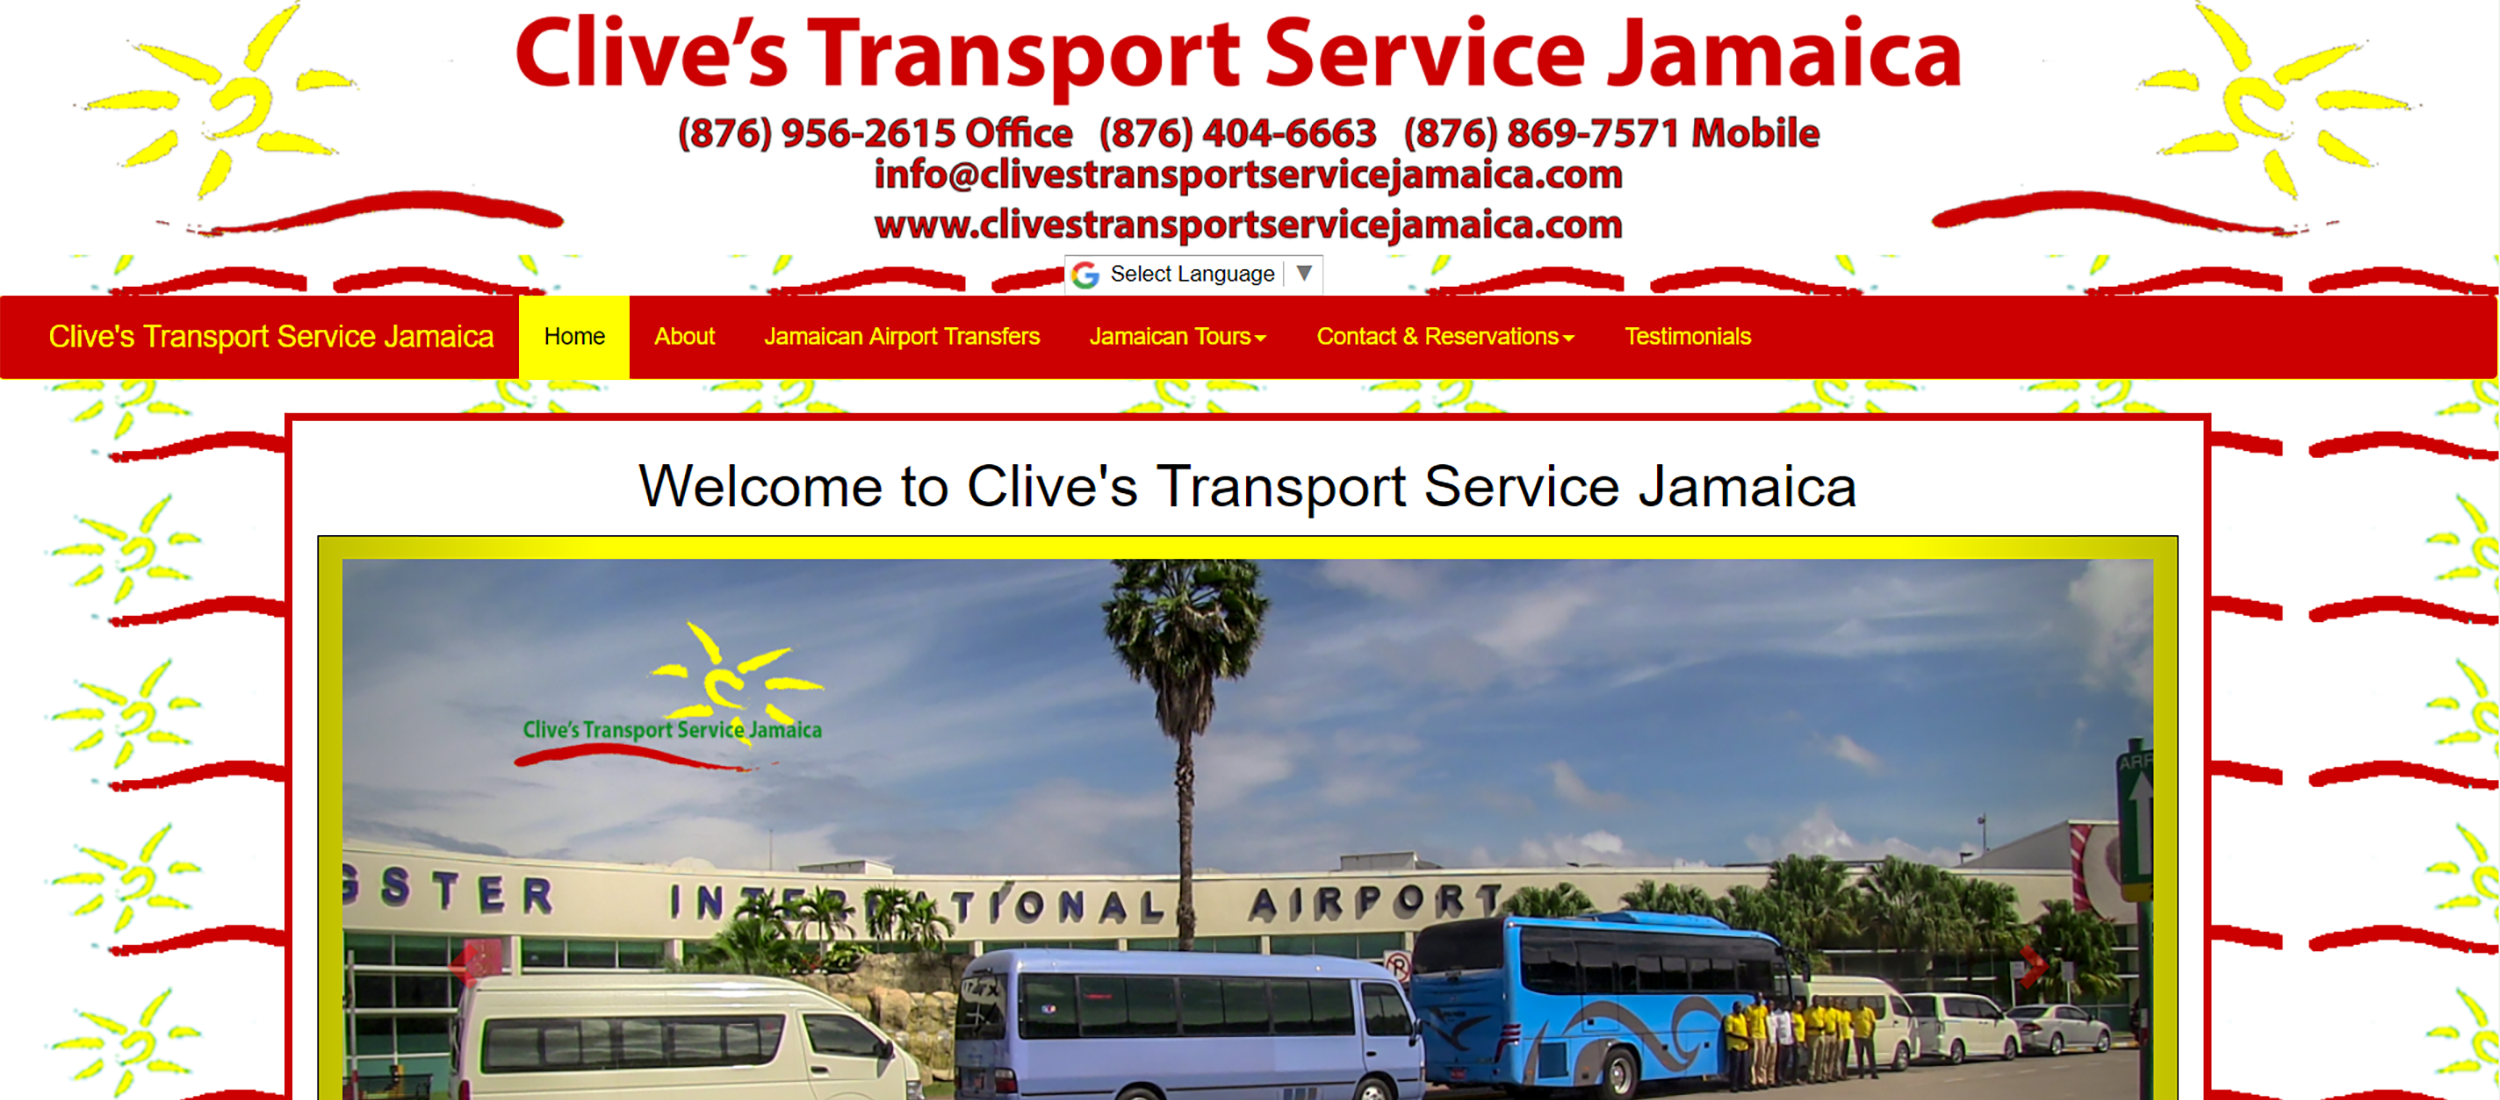 Clive's Transport Service Jamaica by Barry J. Hough Sr.